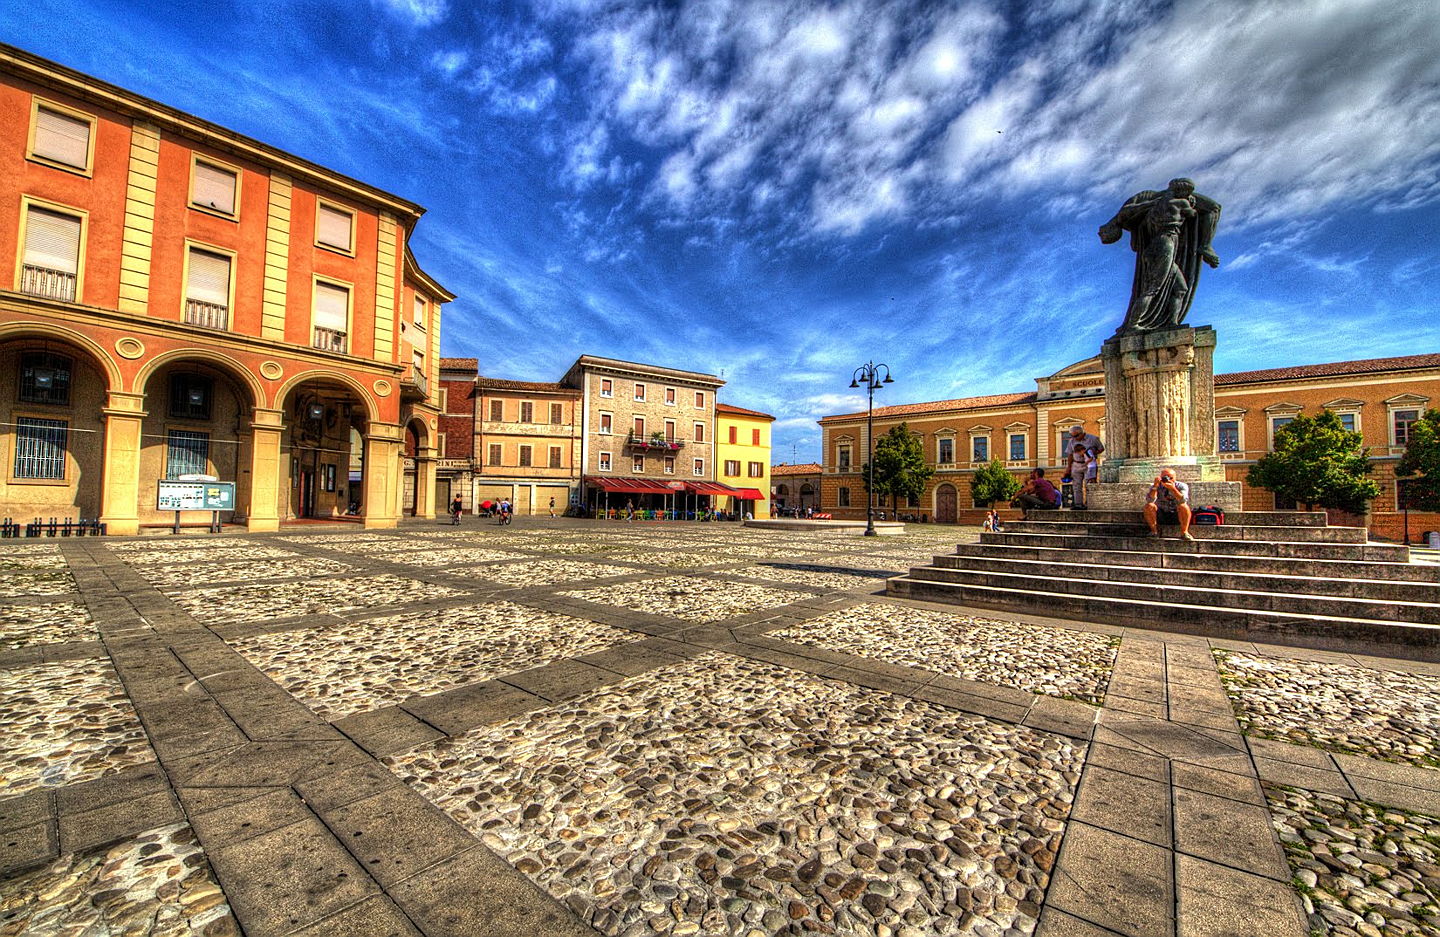  Riccione
- Piazza arco santa.jpg